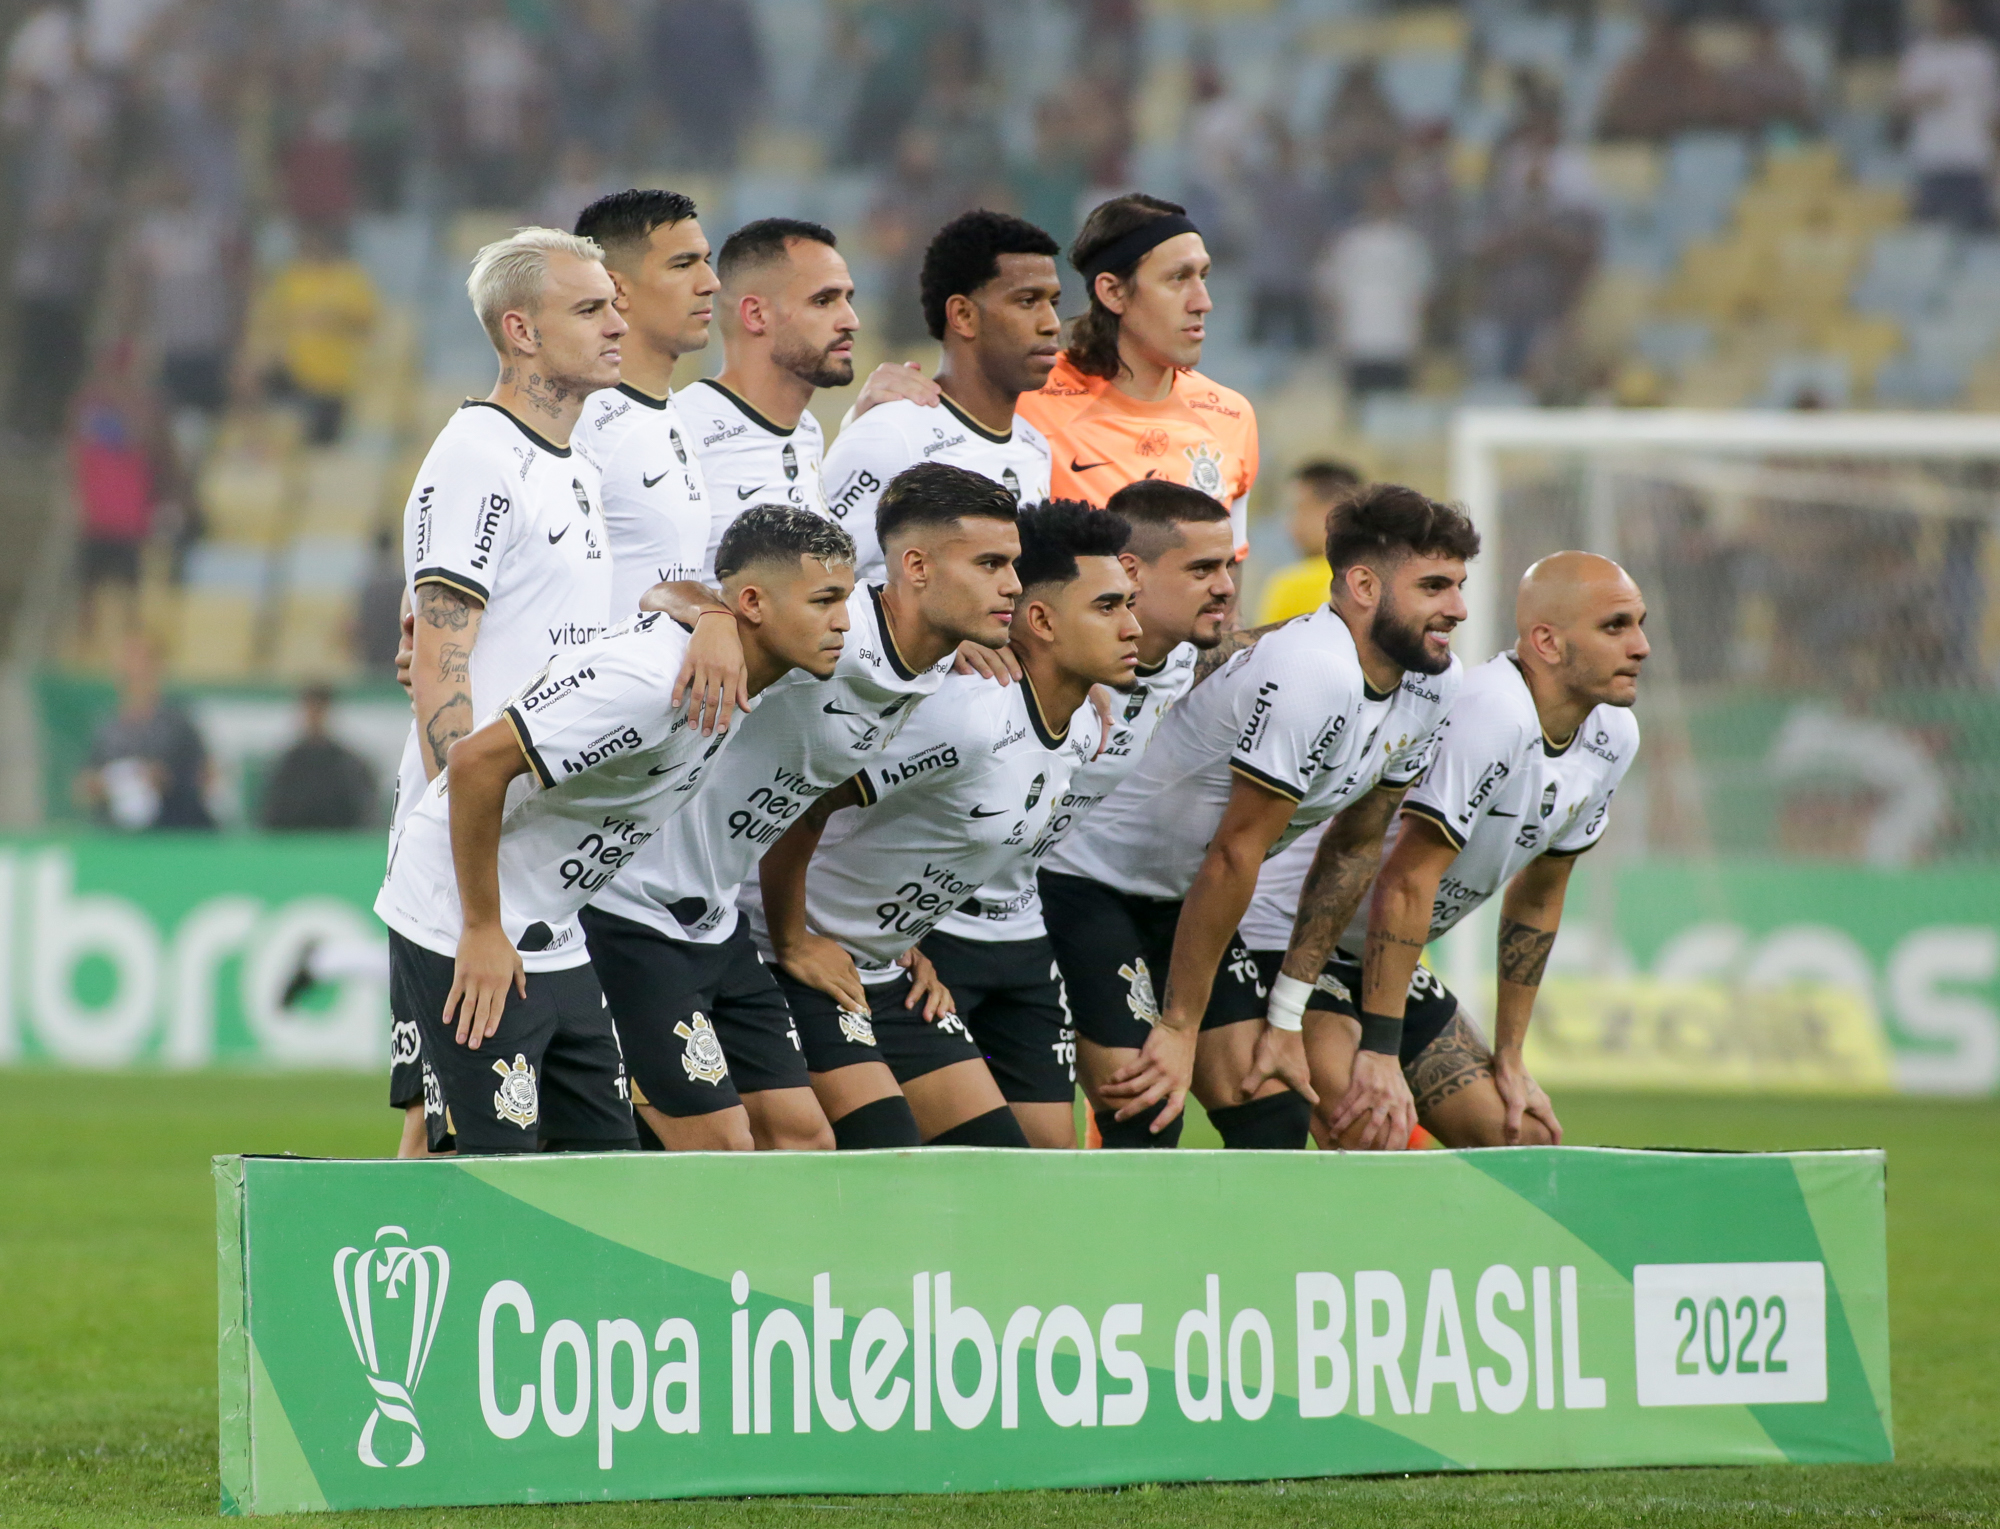 Brasil joga copa de futebol americano nos EUA, onde o 'soccer' só